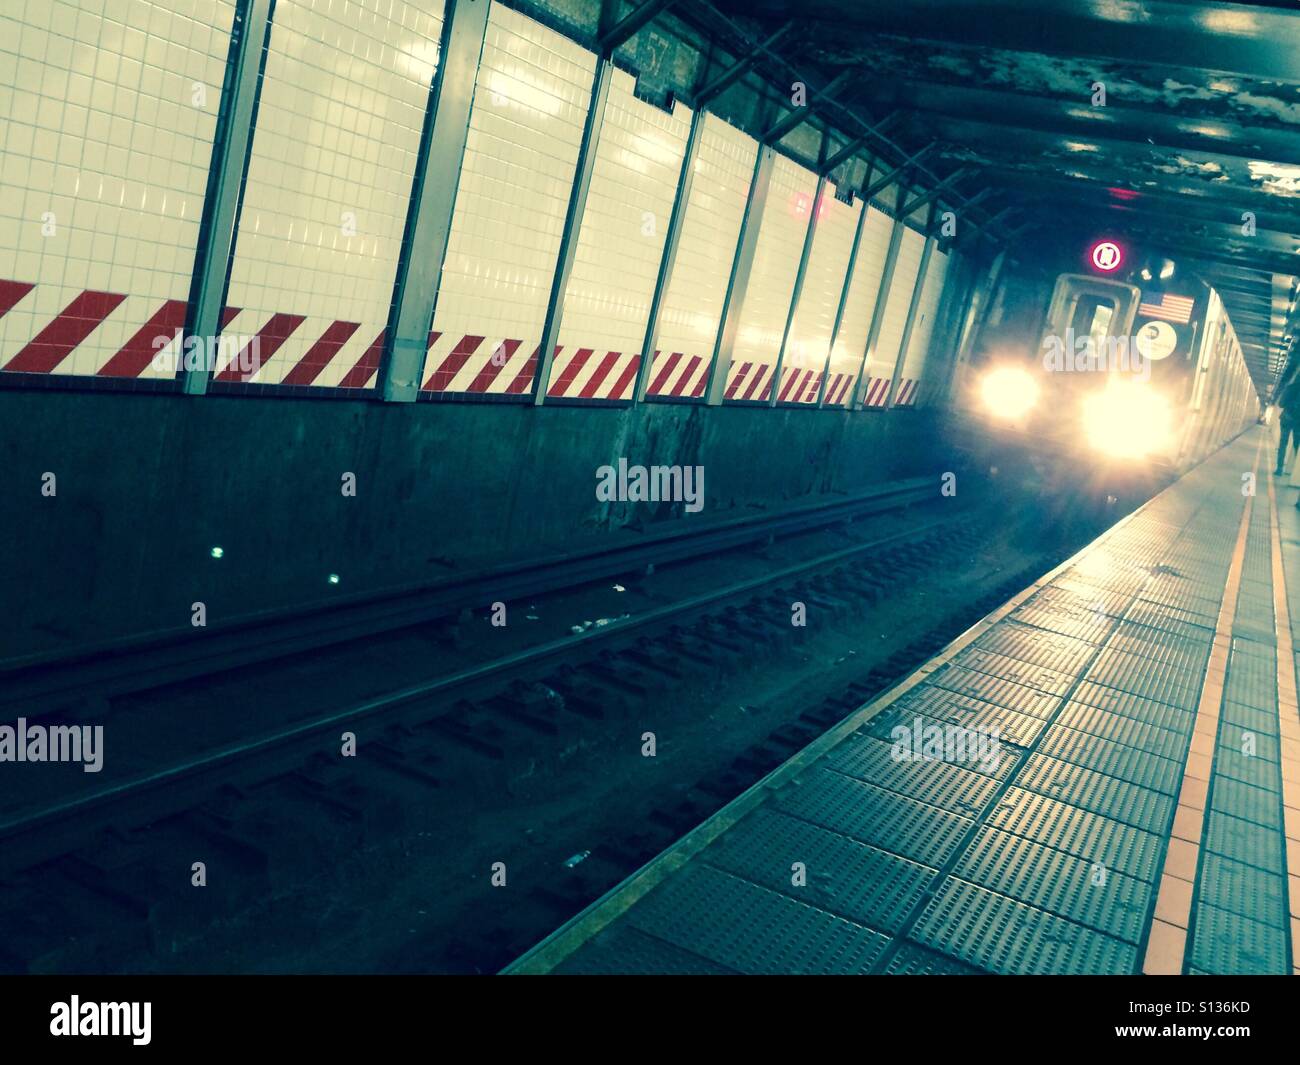 New York City subway car approaches the platform. Stock Photo